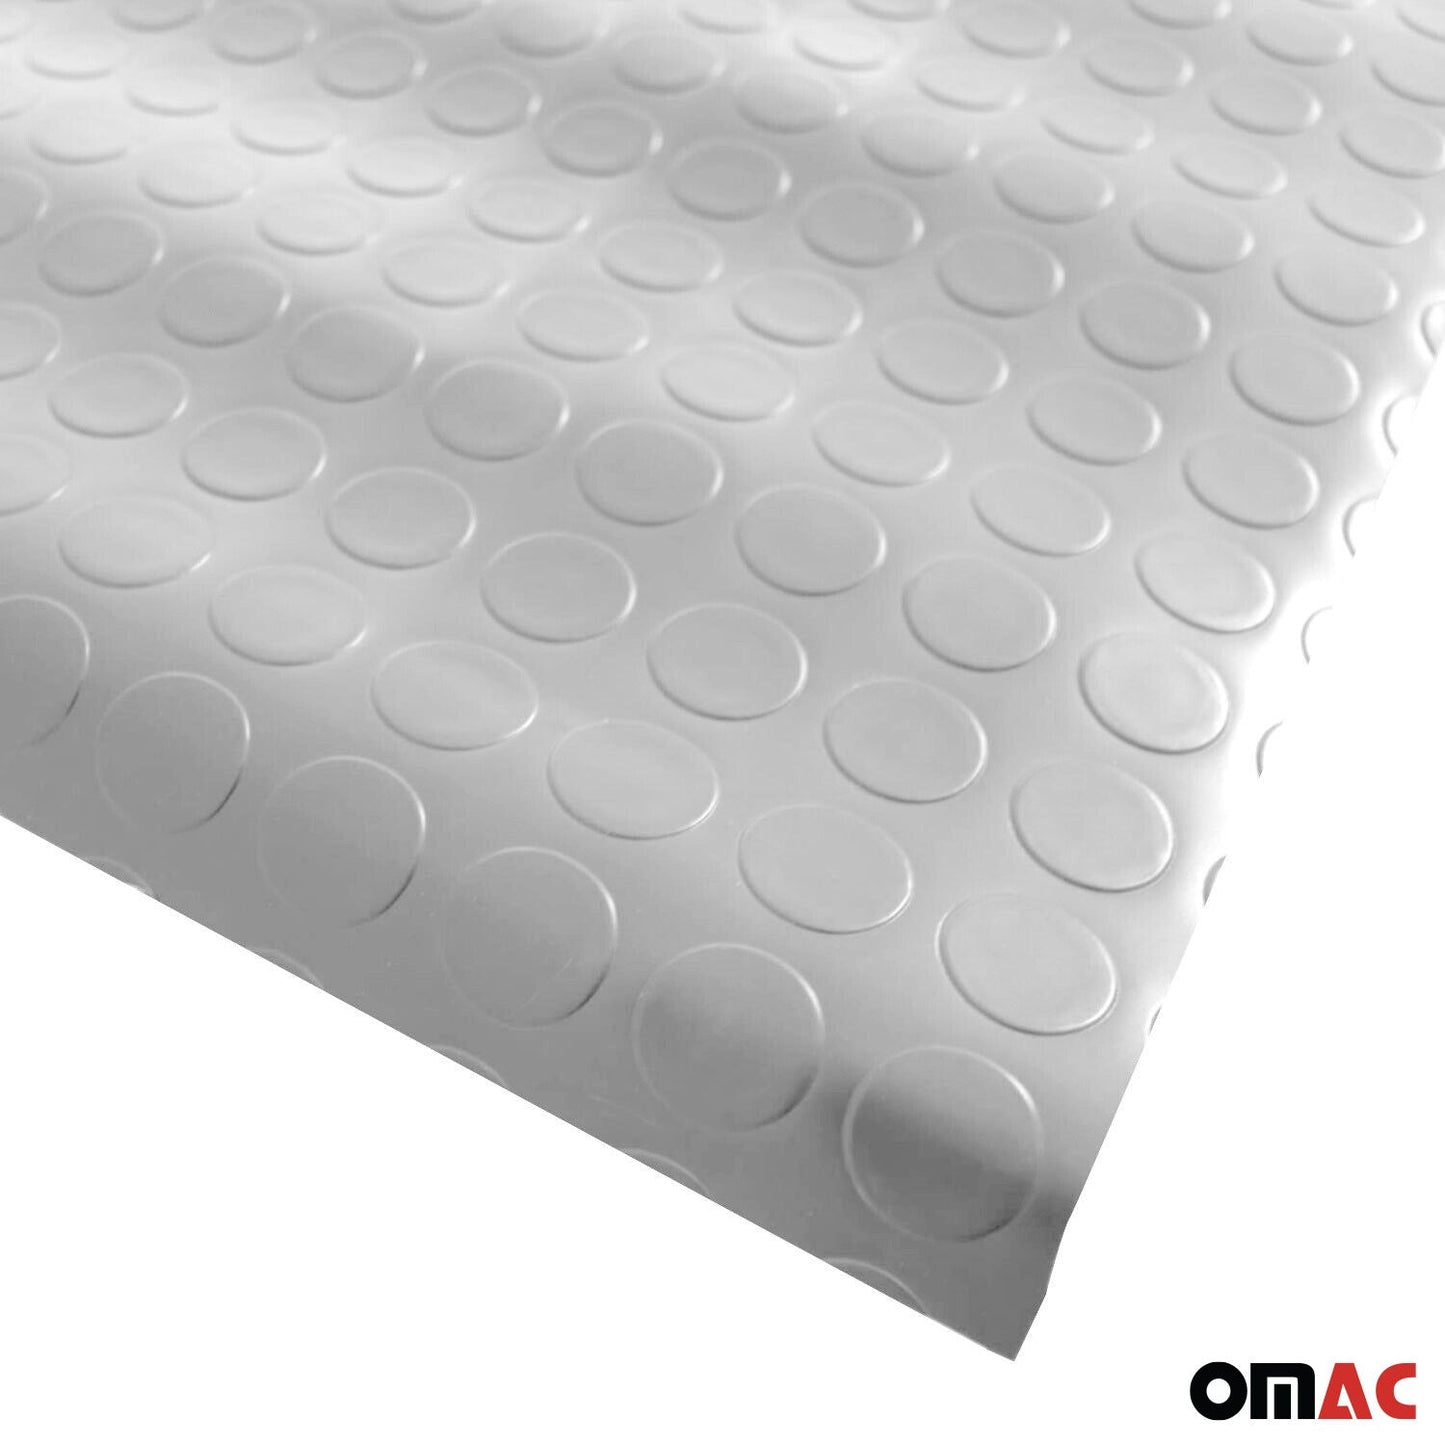 OMAC Rubber Truck Bed Liner Trunk Mat Floor Liner 197x79 inch Peny Style Grey U019129